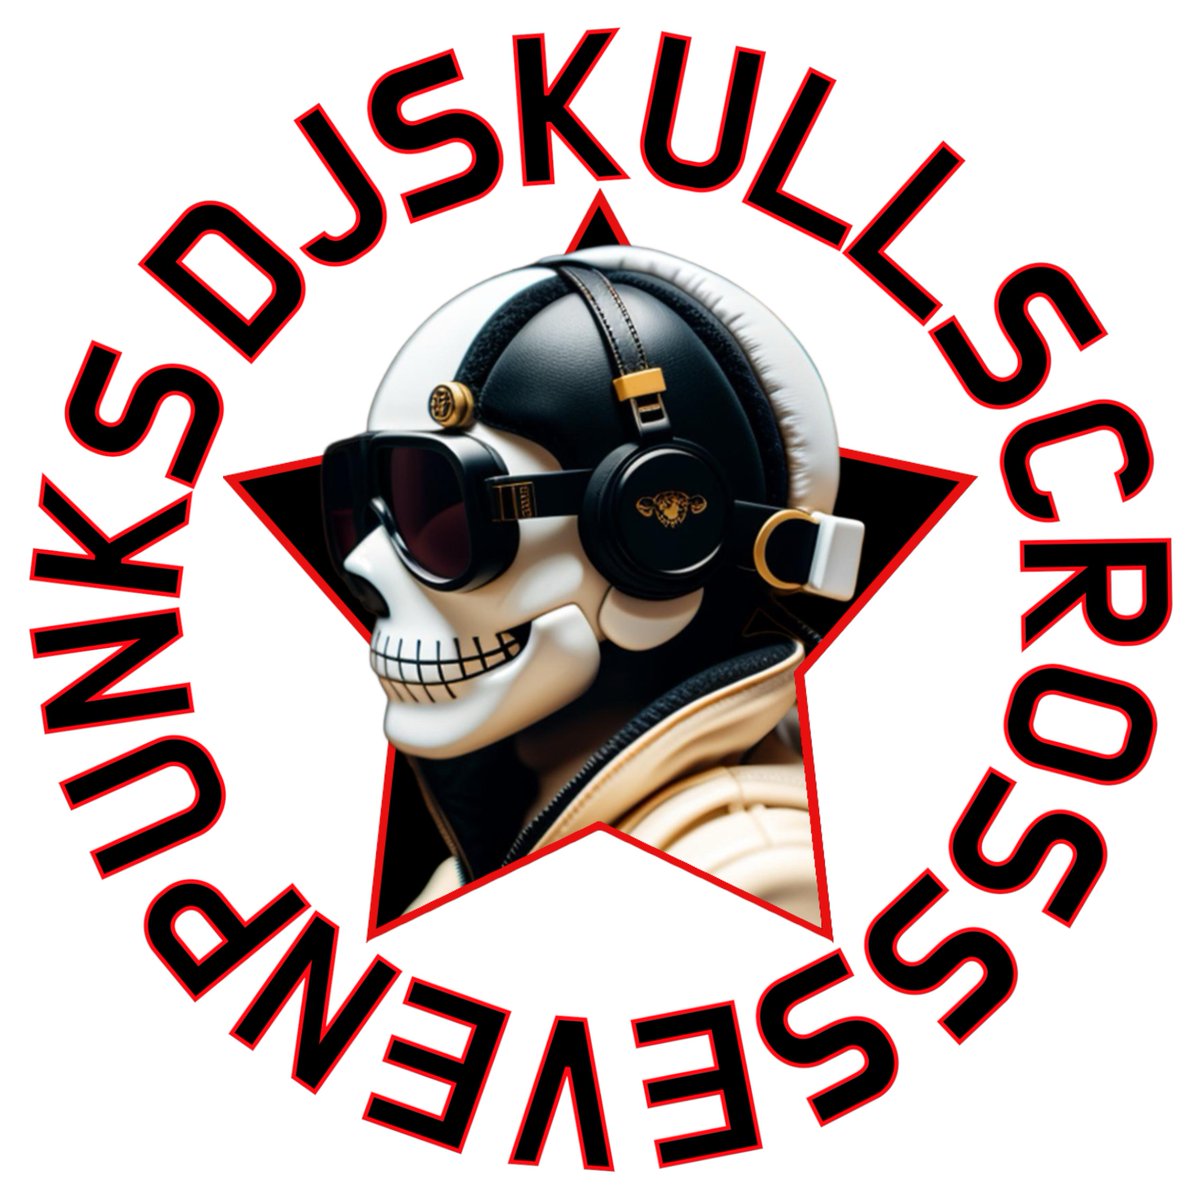 DJ Skulls 460
New Ver !
Check out suzuri!
For commercialization requests, please leave a comment
shop ▶ suzuri.jp/C7PUNKS

#nft #NFTart #nfts #nftGiveway #PFP #skull #skullart
#DJ #DJSkulls #objkt #objktcom #tezosart #AIart #nftshill #opensea #poligon #eth #Suzuri